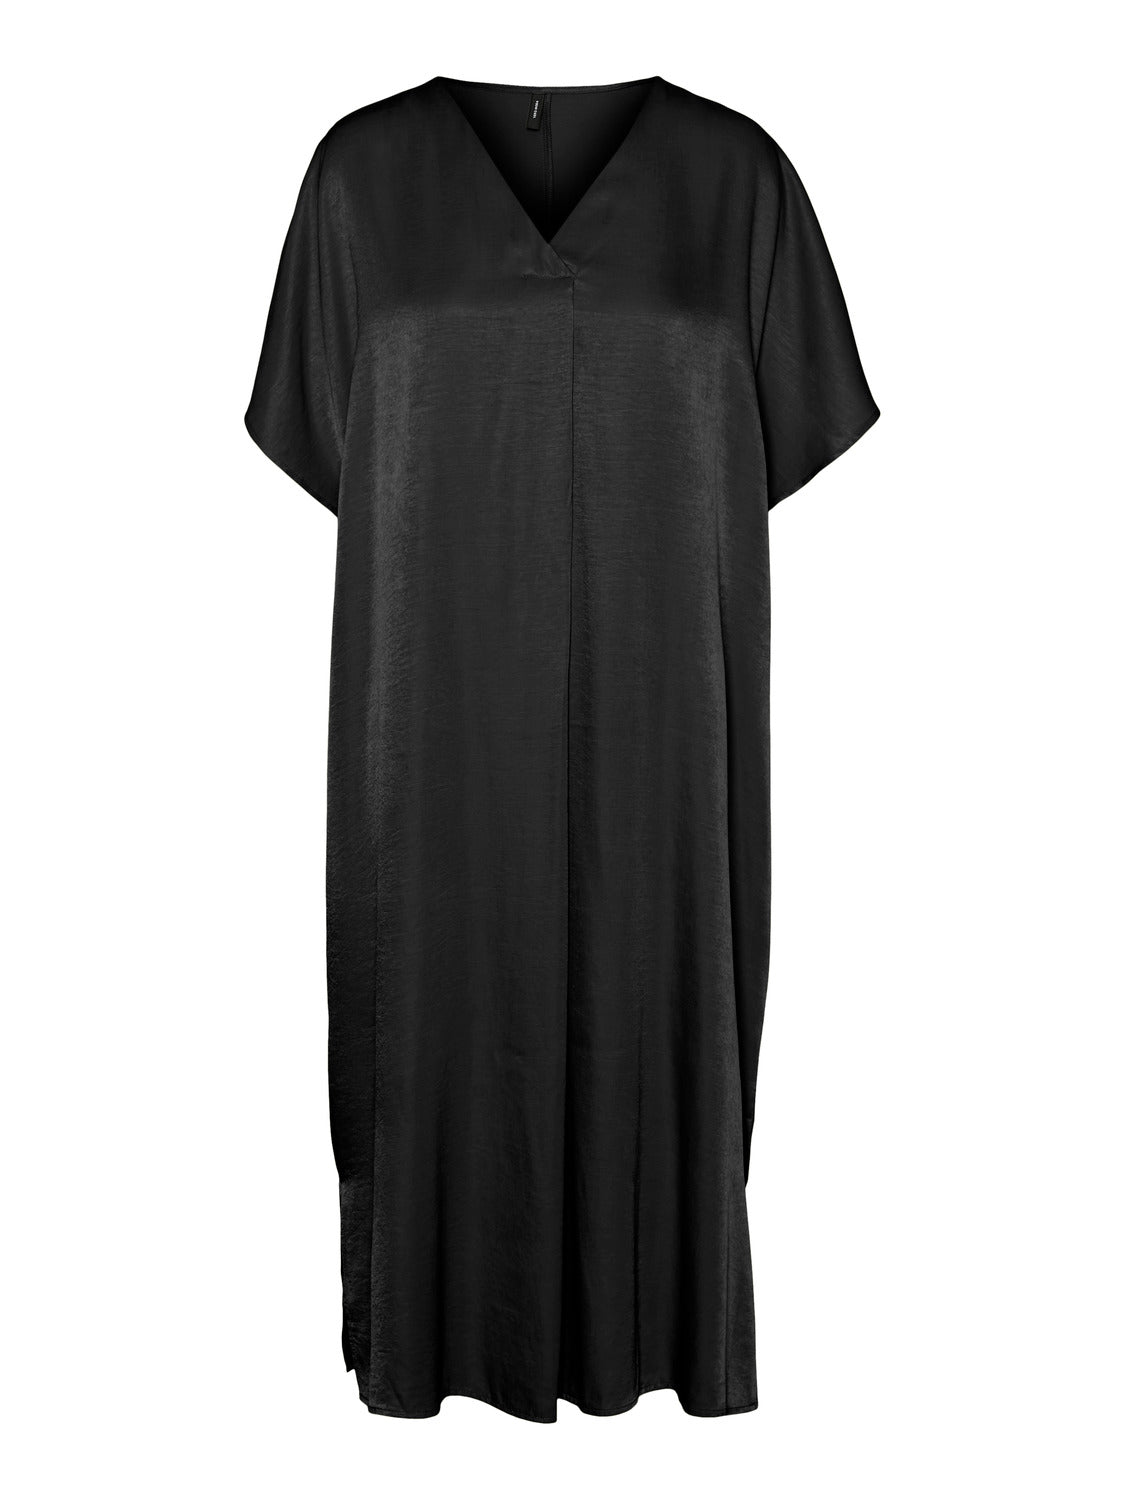 VMASHTON Dress - Black